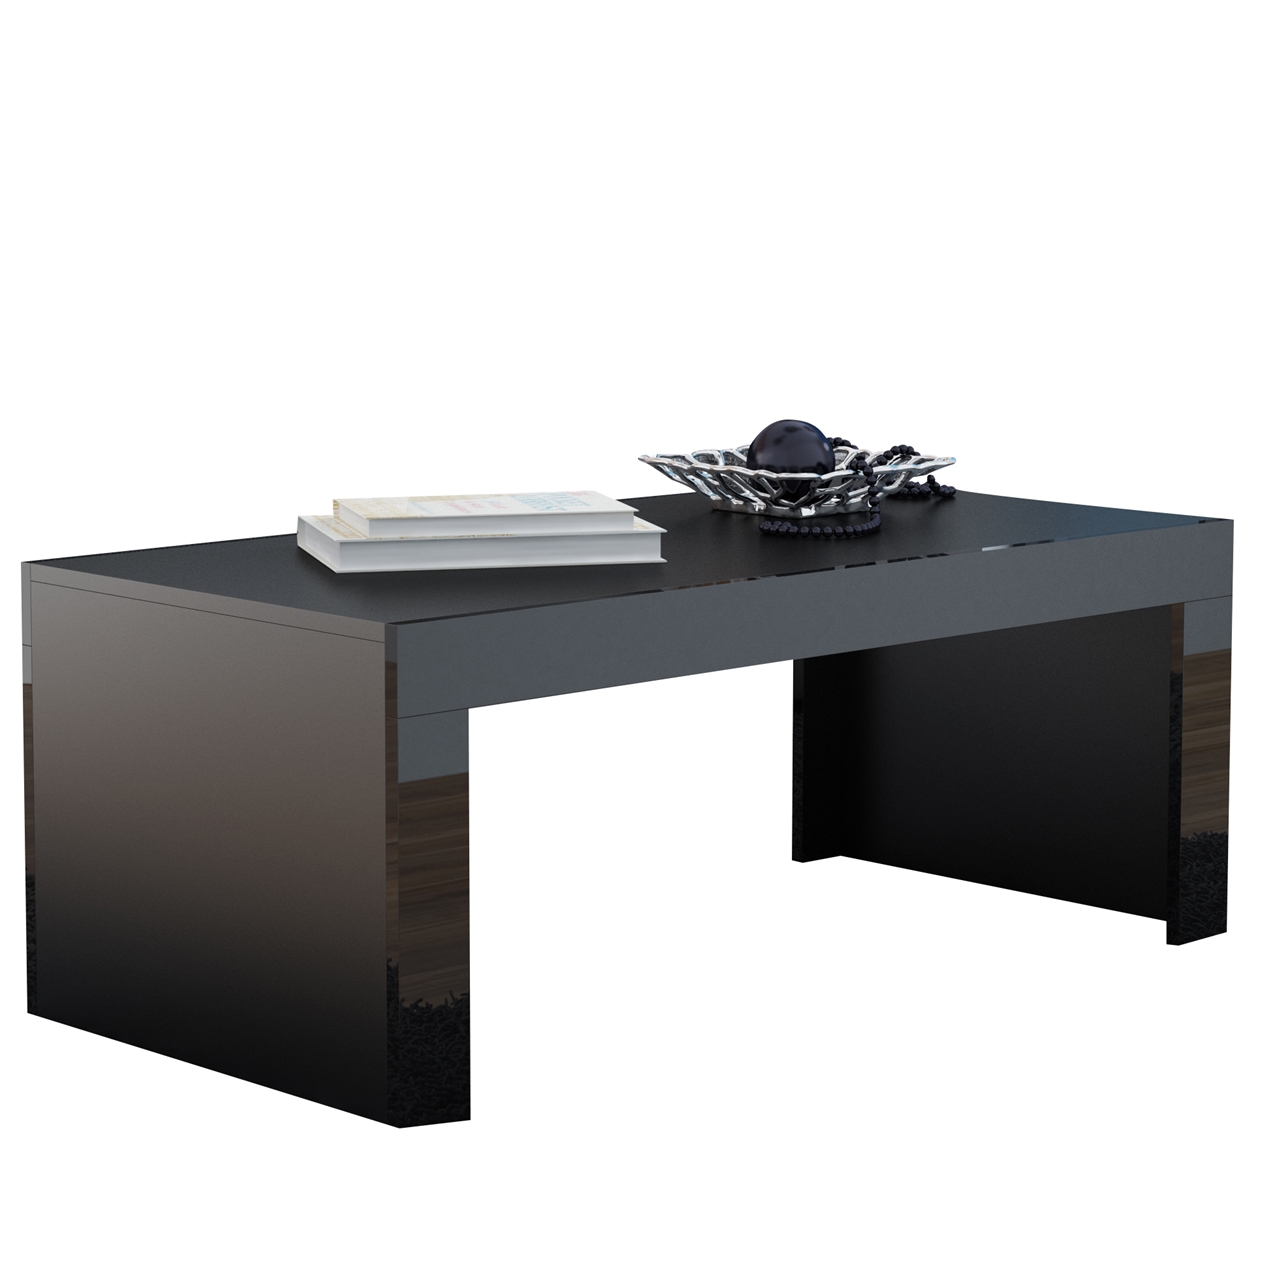 Coffee table TESS 120 black / black gloss